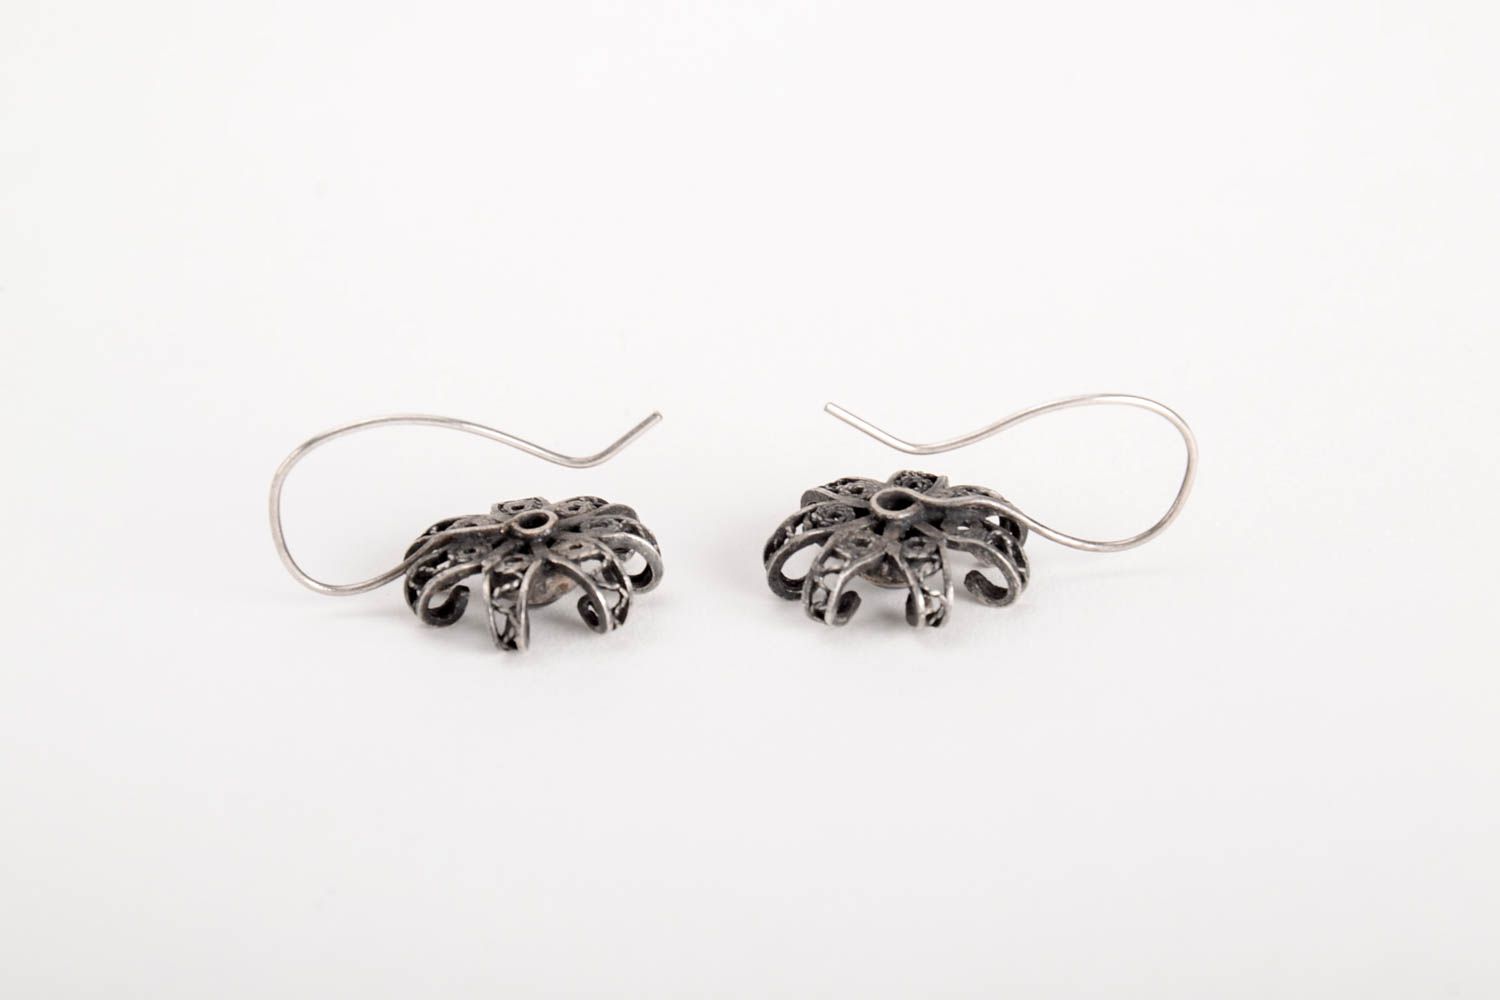 Handmade earrings designer earrings unusual silver earrings gift ideas photo 3